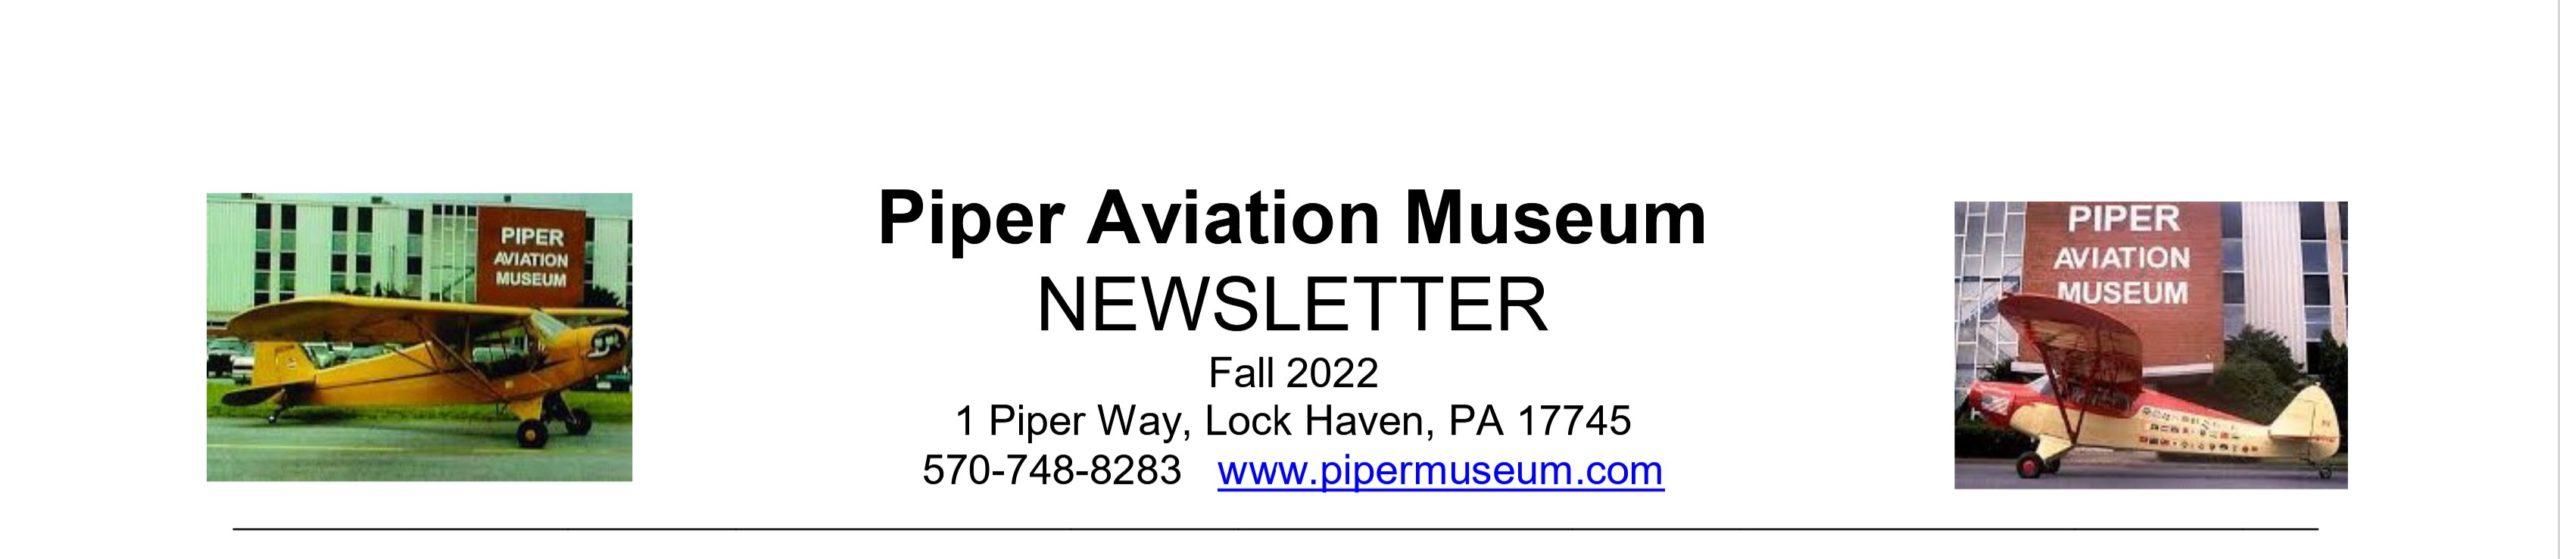 Piper Aviation Museum 2022 Fall Newsletter